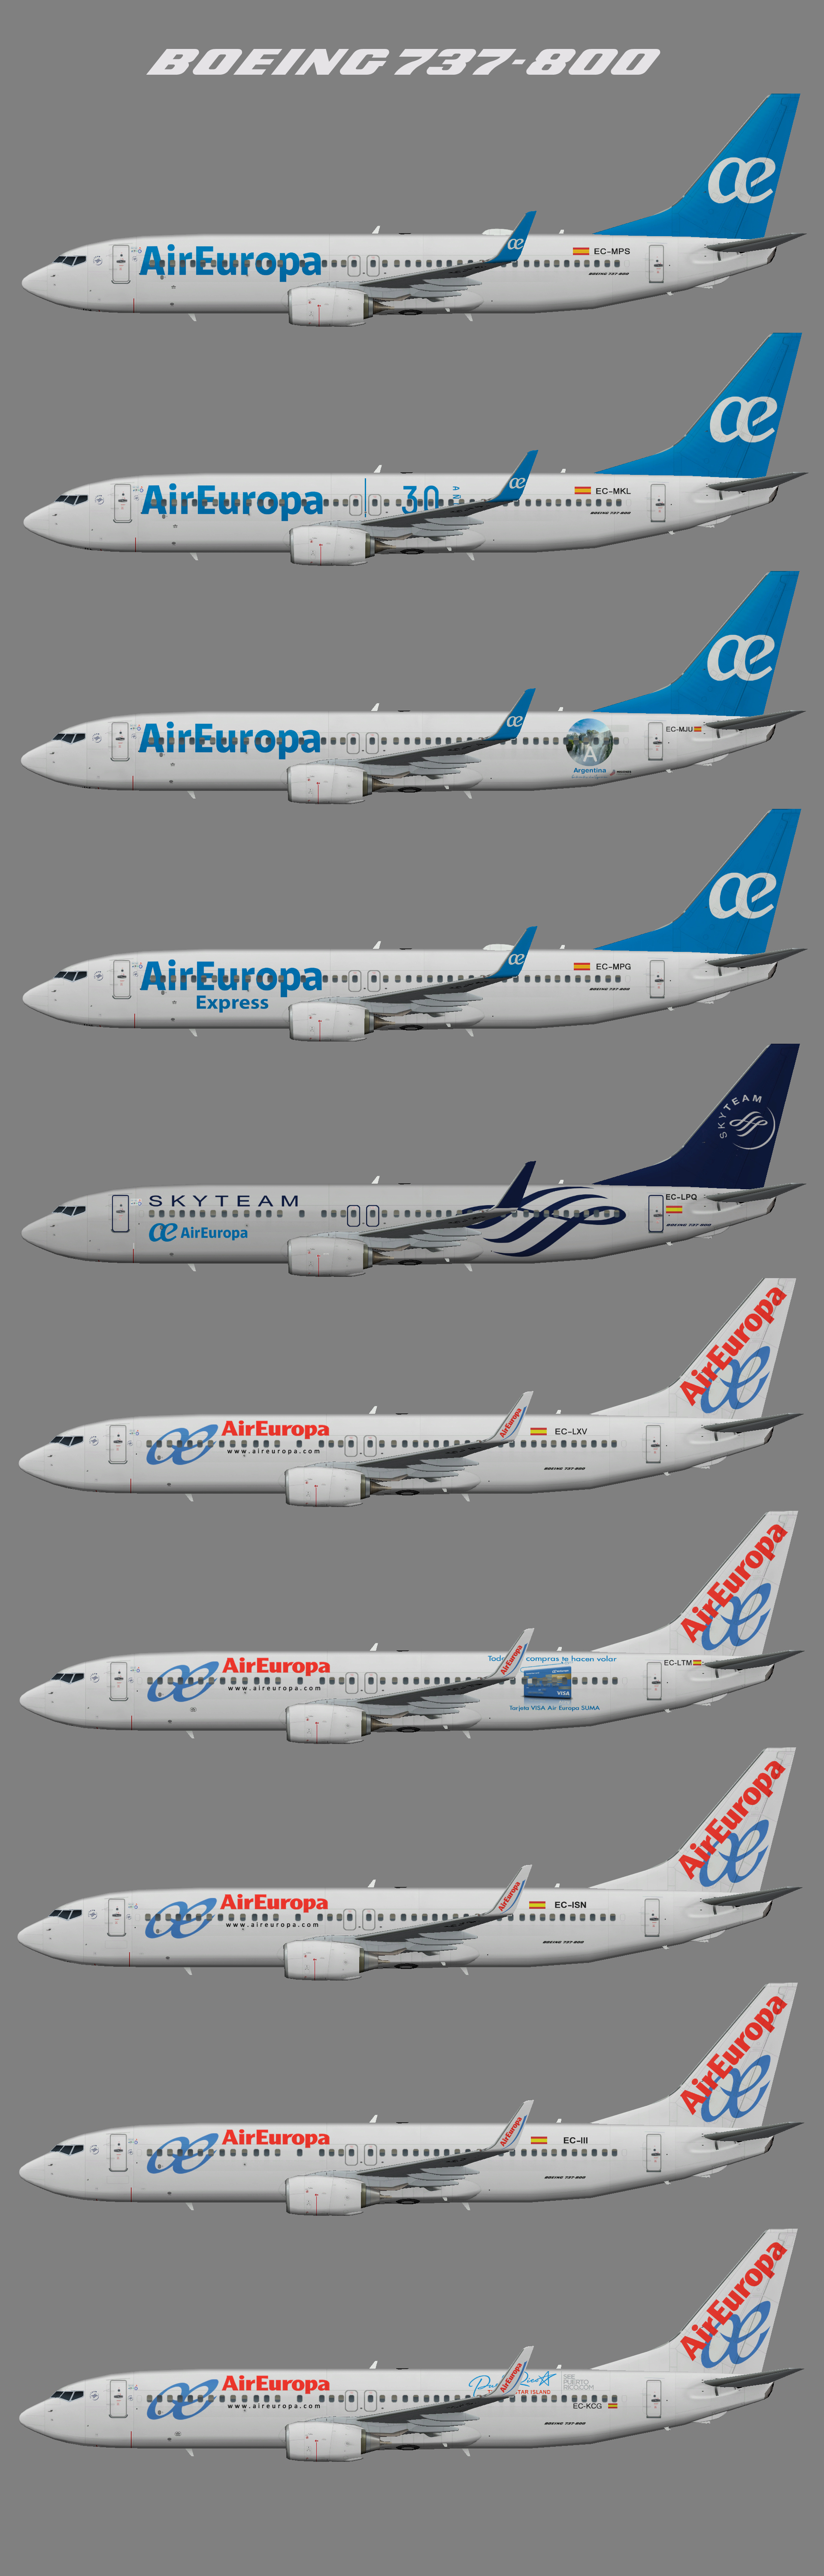 Air Europa Boeing 737-800w (representative fleet)